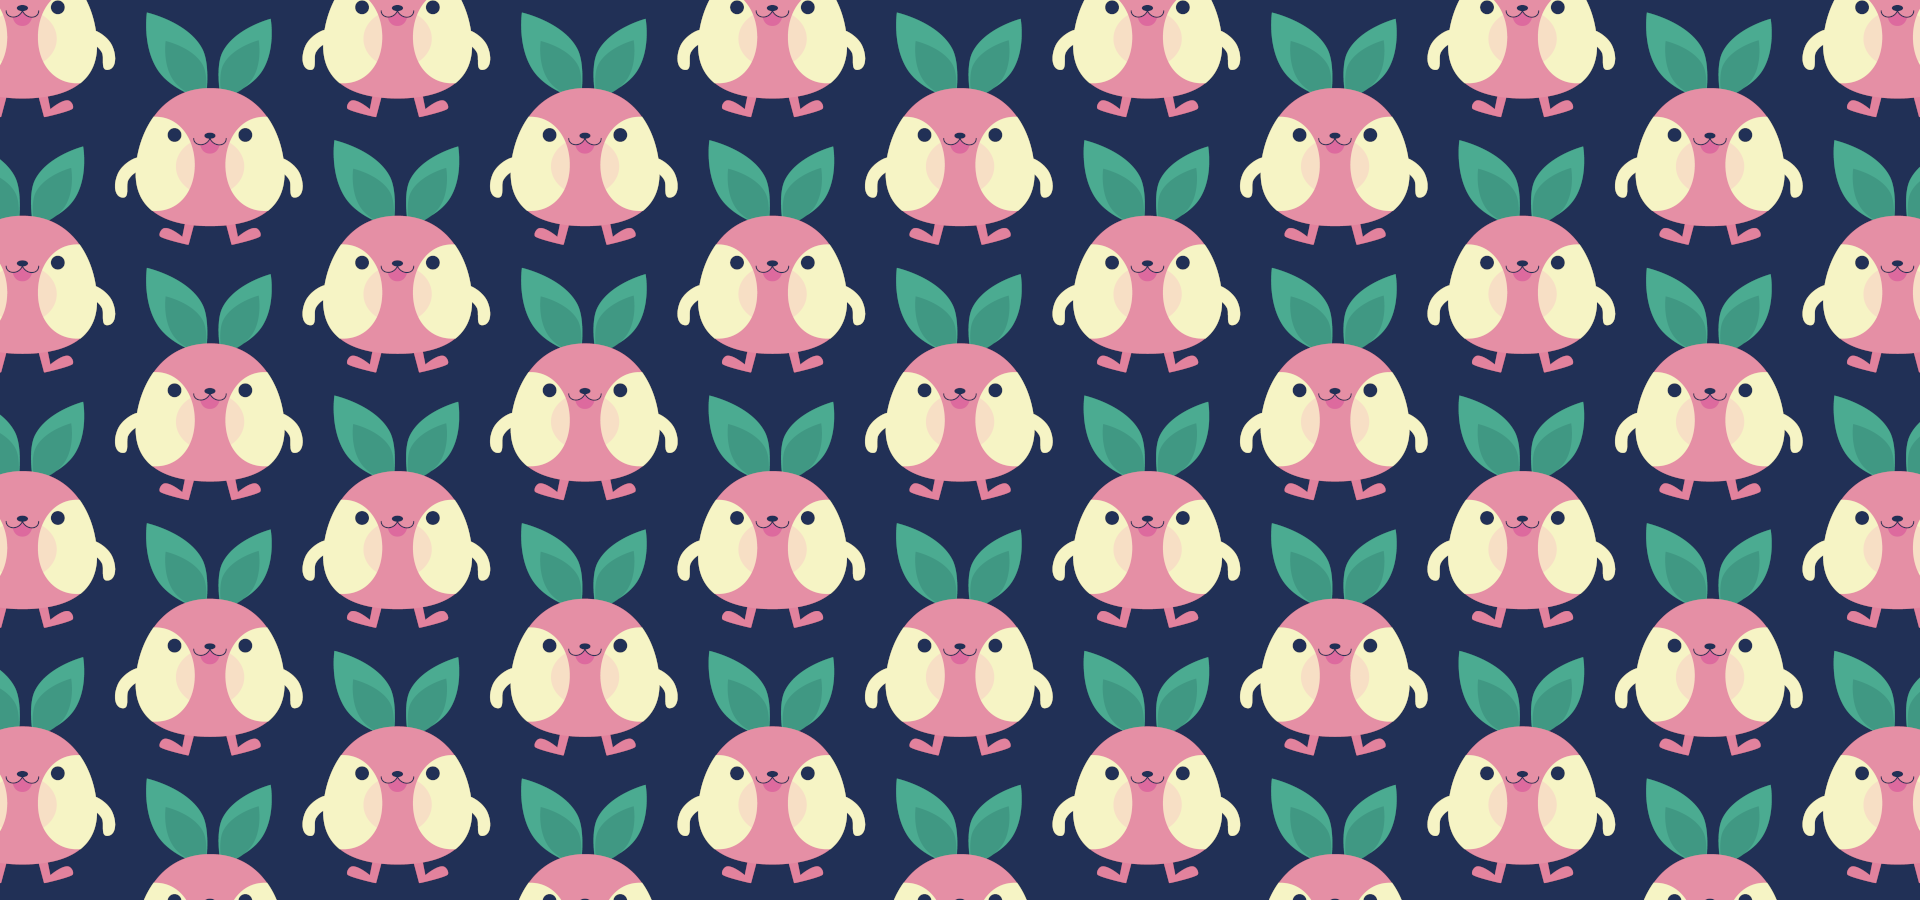 Apple bunny pattern